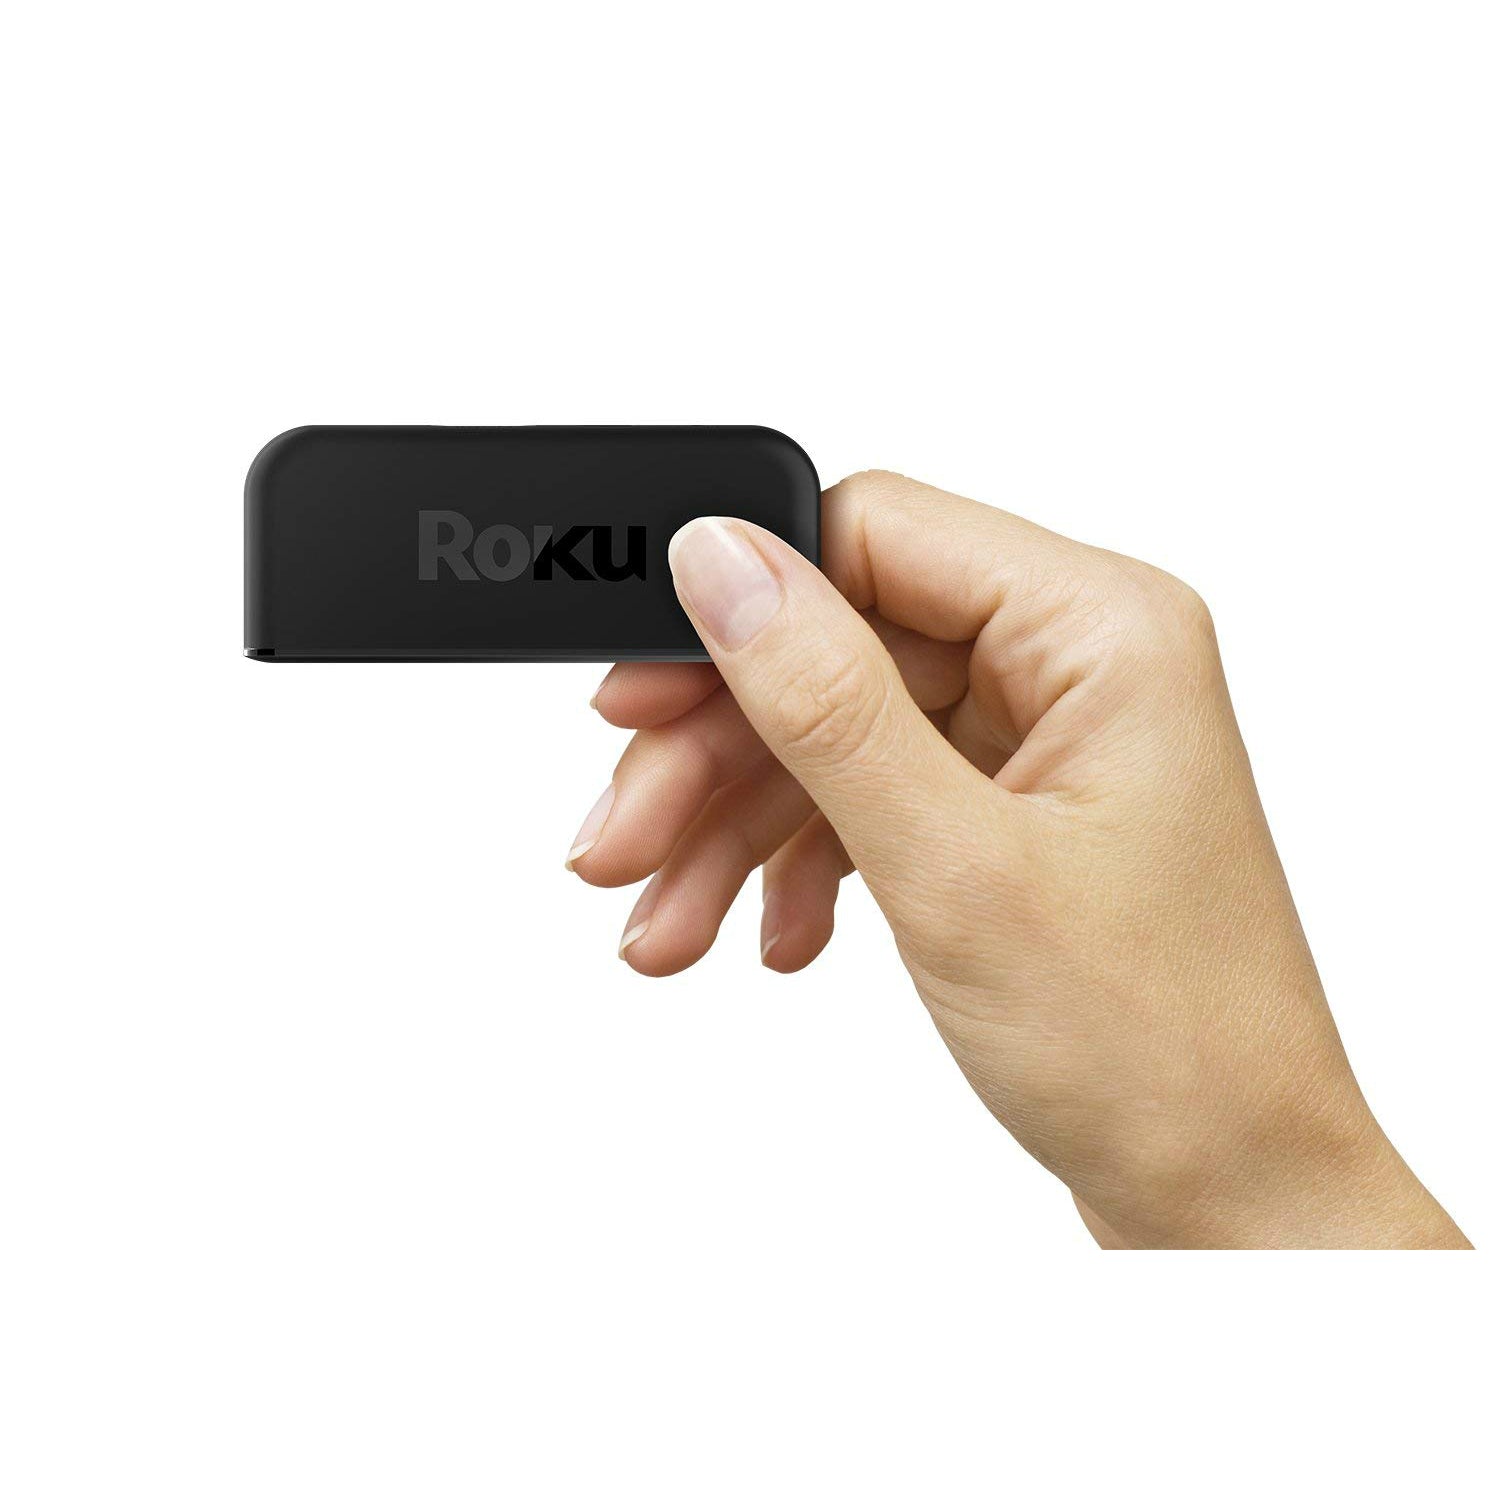 Roku 3900R Express Streaming Media Player with Remote Control, 5V, 1A